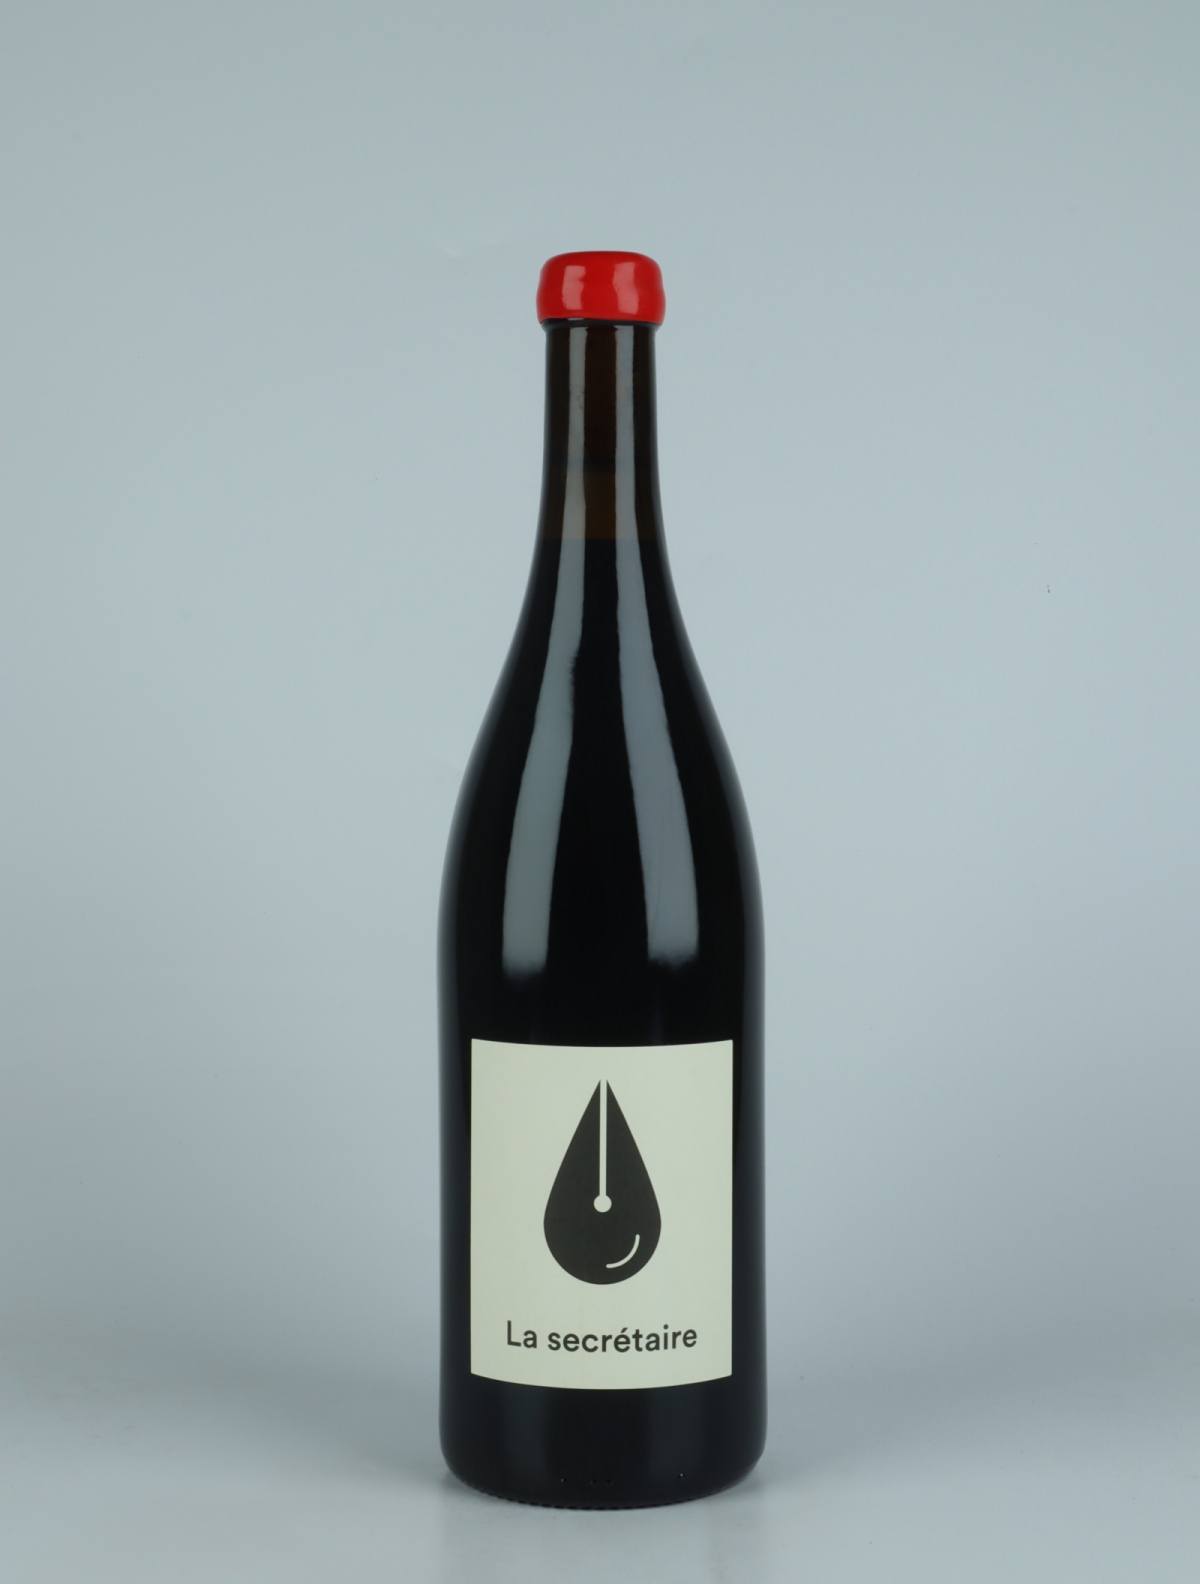 A bottle 2022 La Secrétaire Red wine from The Office, Loire in France